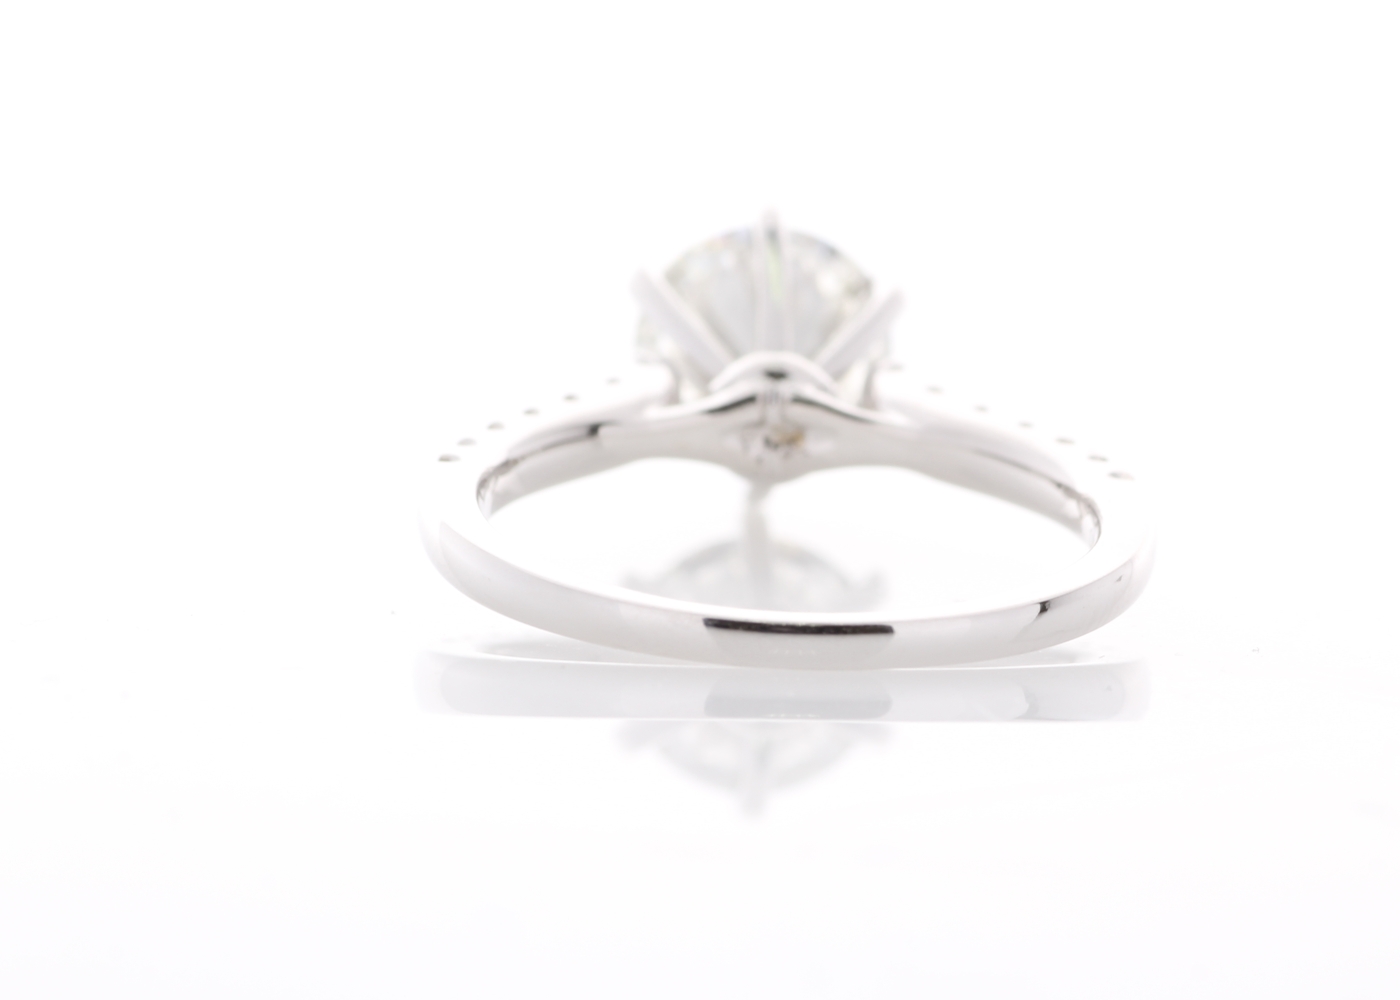 18ct White Gold Single Stone Prong Set With Stone Set Shoulders Diamond Ring (1.56) 1.85 Carats - Image 3 of 5